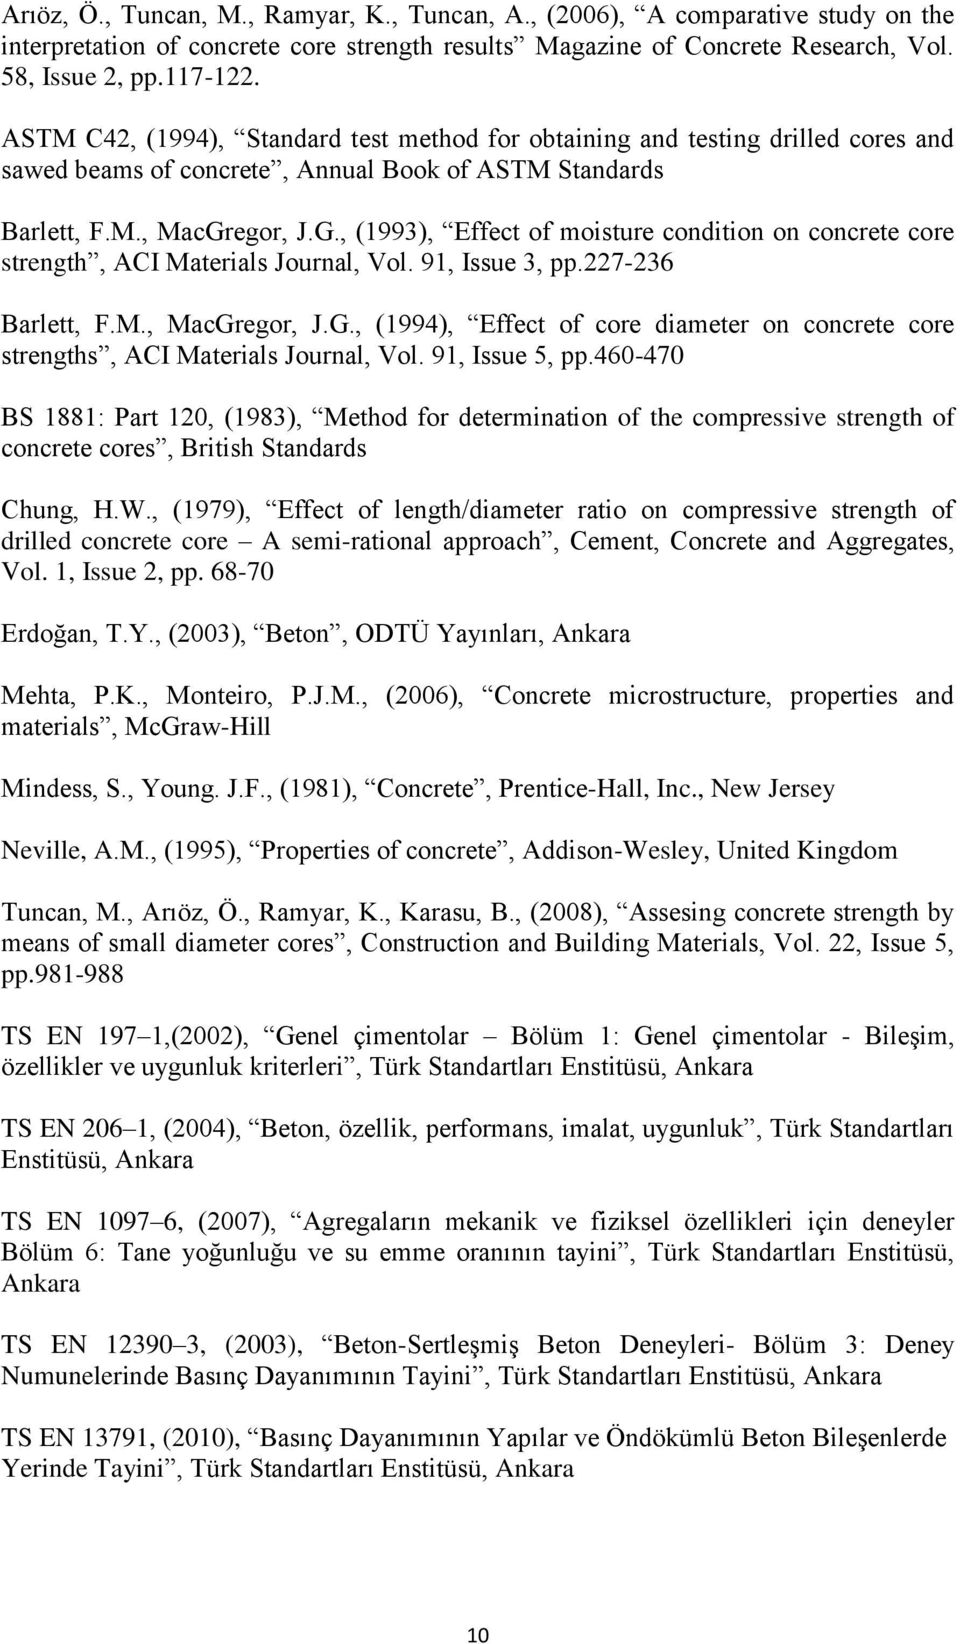 egor, J.G., (1993), Effect of moisture condition on concrete core strength, ACI Materials Journal, Vol. 91, Issue 3, pp.227-236 Barlett, F.M., MacGregor, J.G., (1994), Effect of core diameter on concrete core strengths, ACI Materials Journal, Vol.